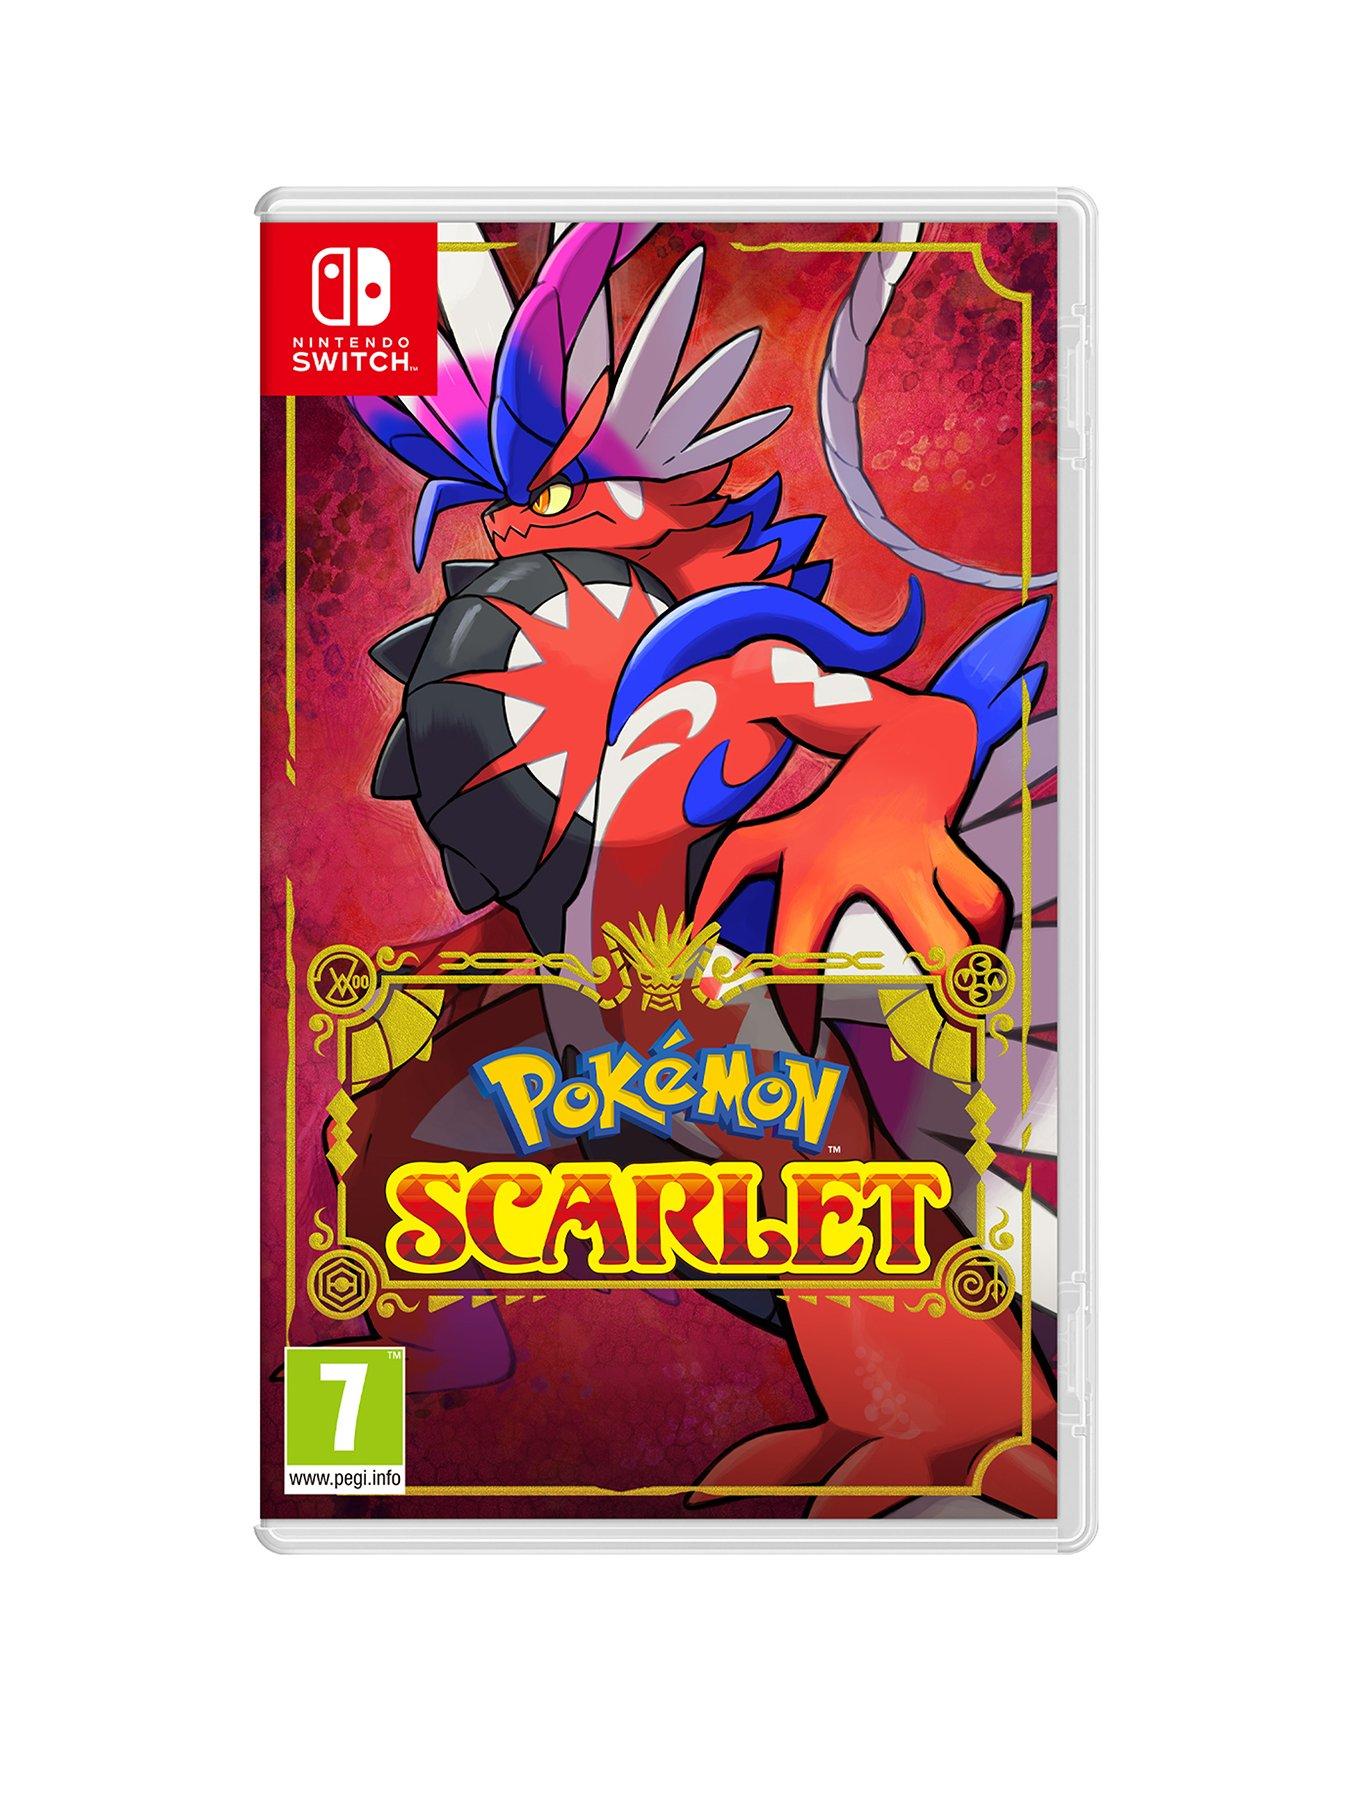 Pokemon Scarlet and Violet Pokedex DLC - Full list of 223 Pokemon returning  this year, Gaming, Entertainment